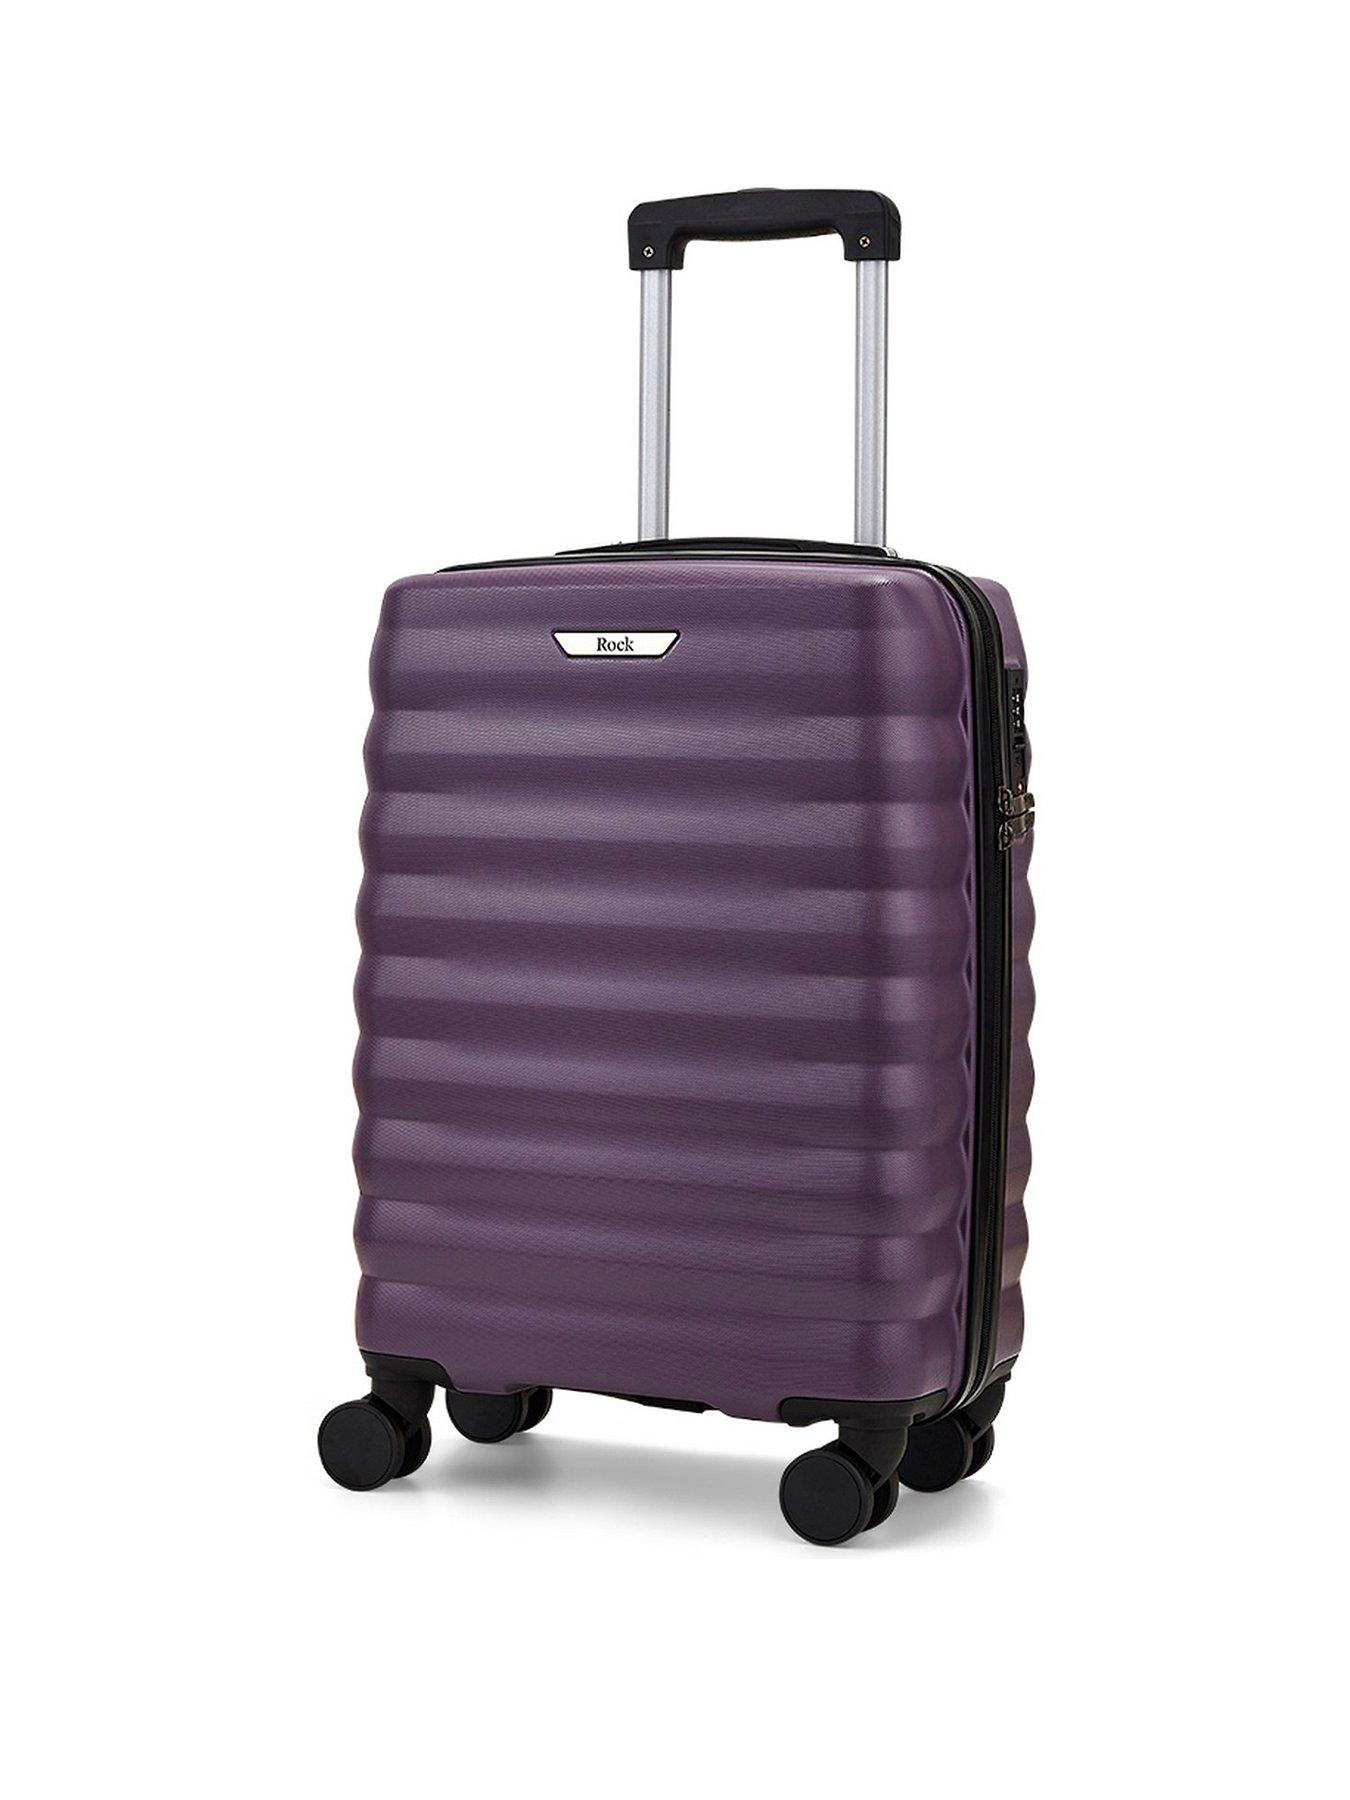 Rock Luggage Berlin 8 Wheel Hardshell Small Cabin Suitcase - Purple